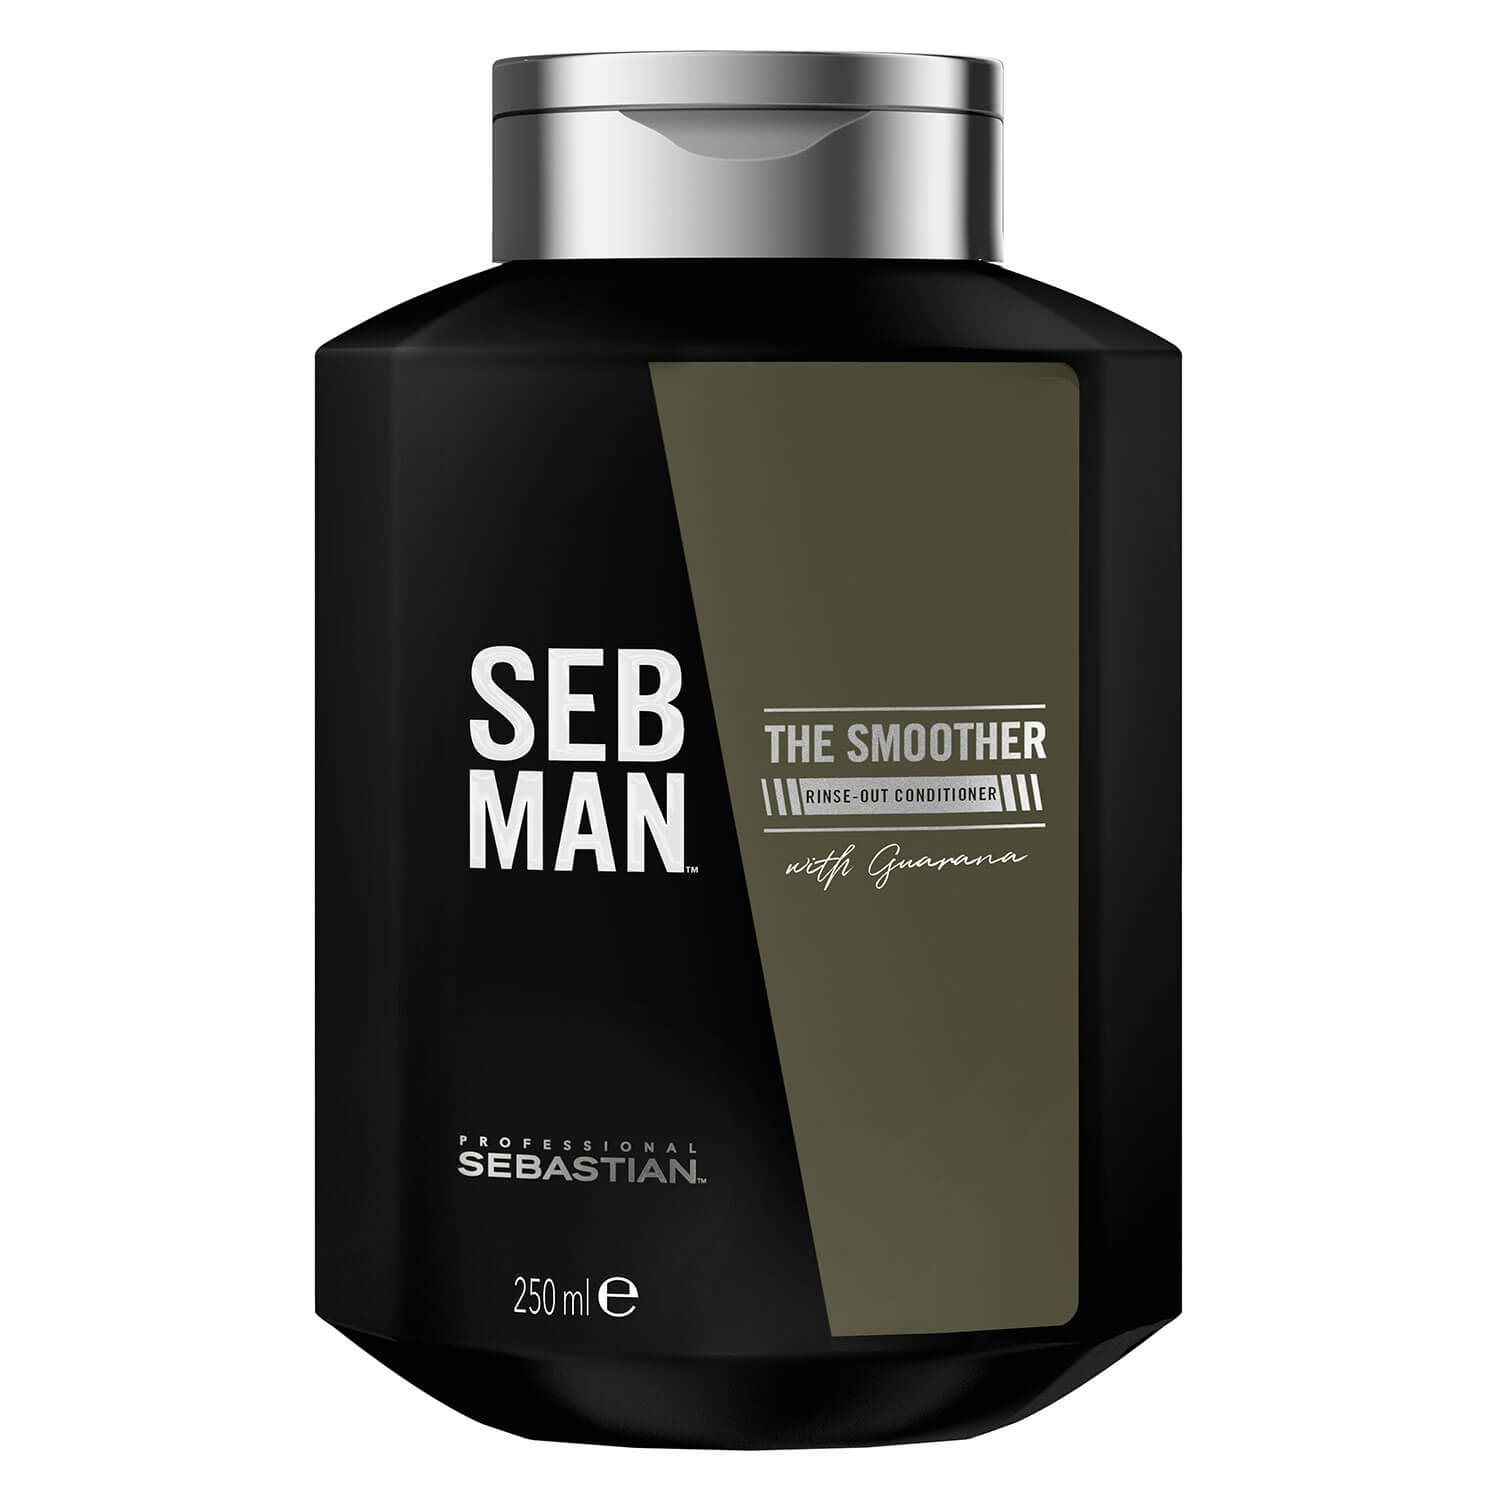 Produktbild von SEB MAN - The Smoother Rinse-Out Conditioner